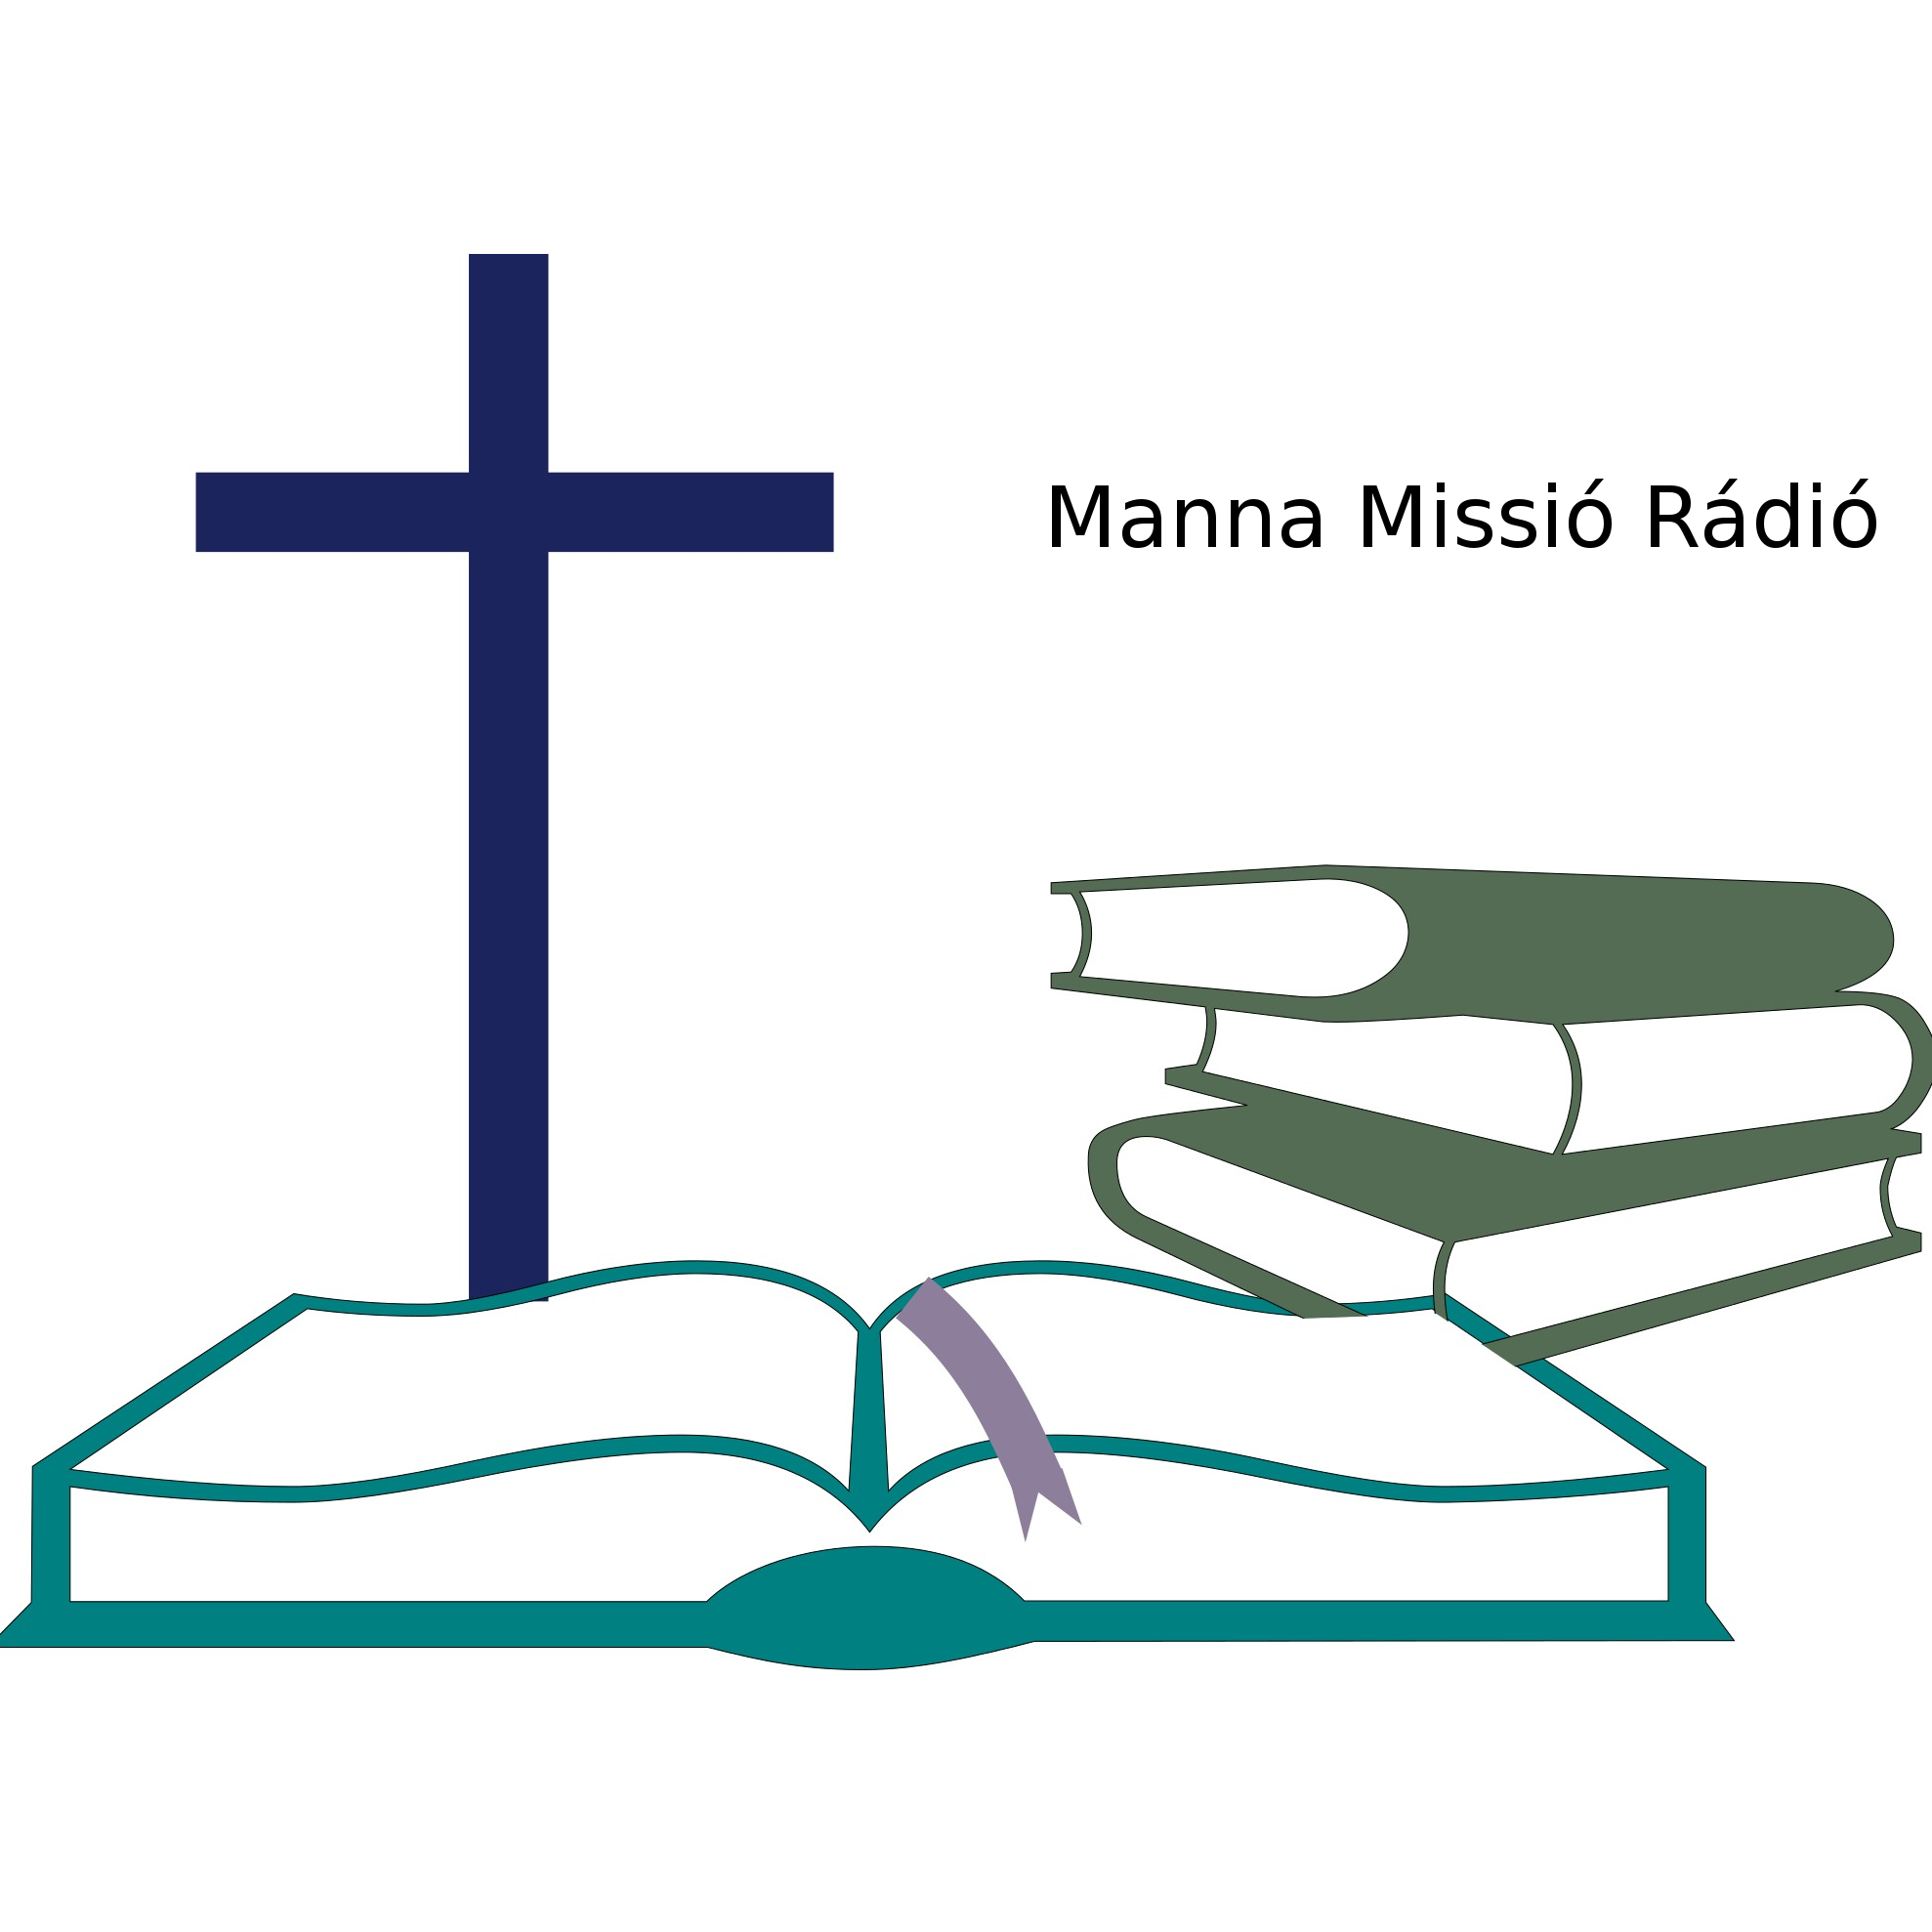 Manna Missio Radio